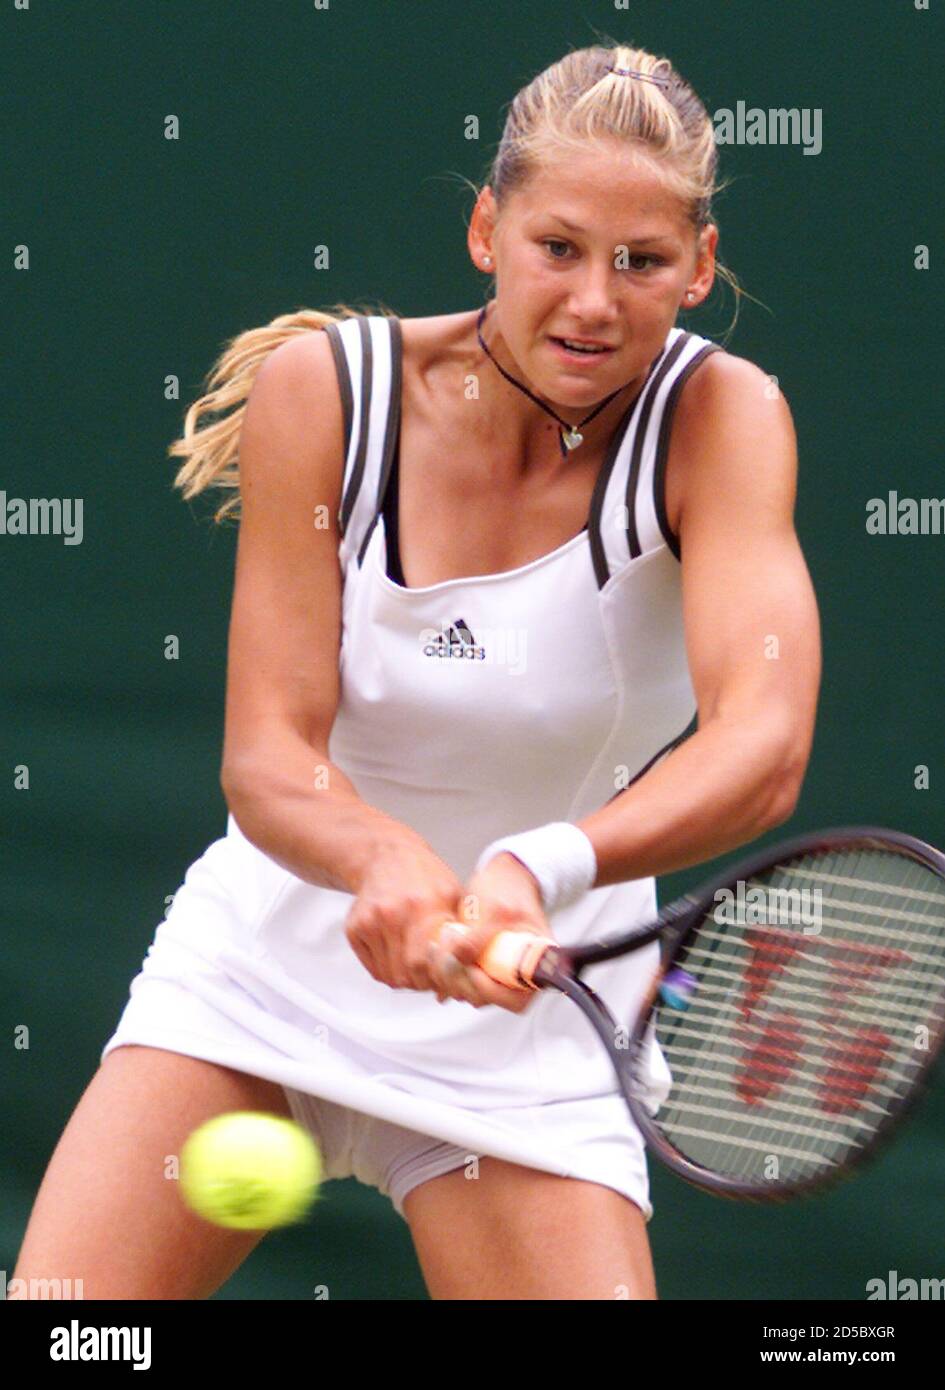 Tennis venus williams anna kournikova hi-res stock photography and images -  Page 2 - Alamy